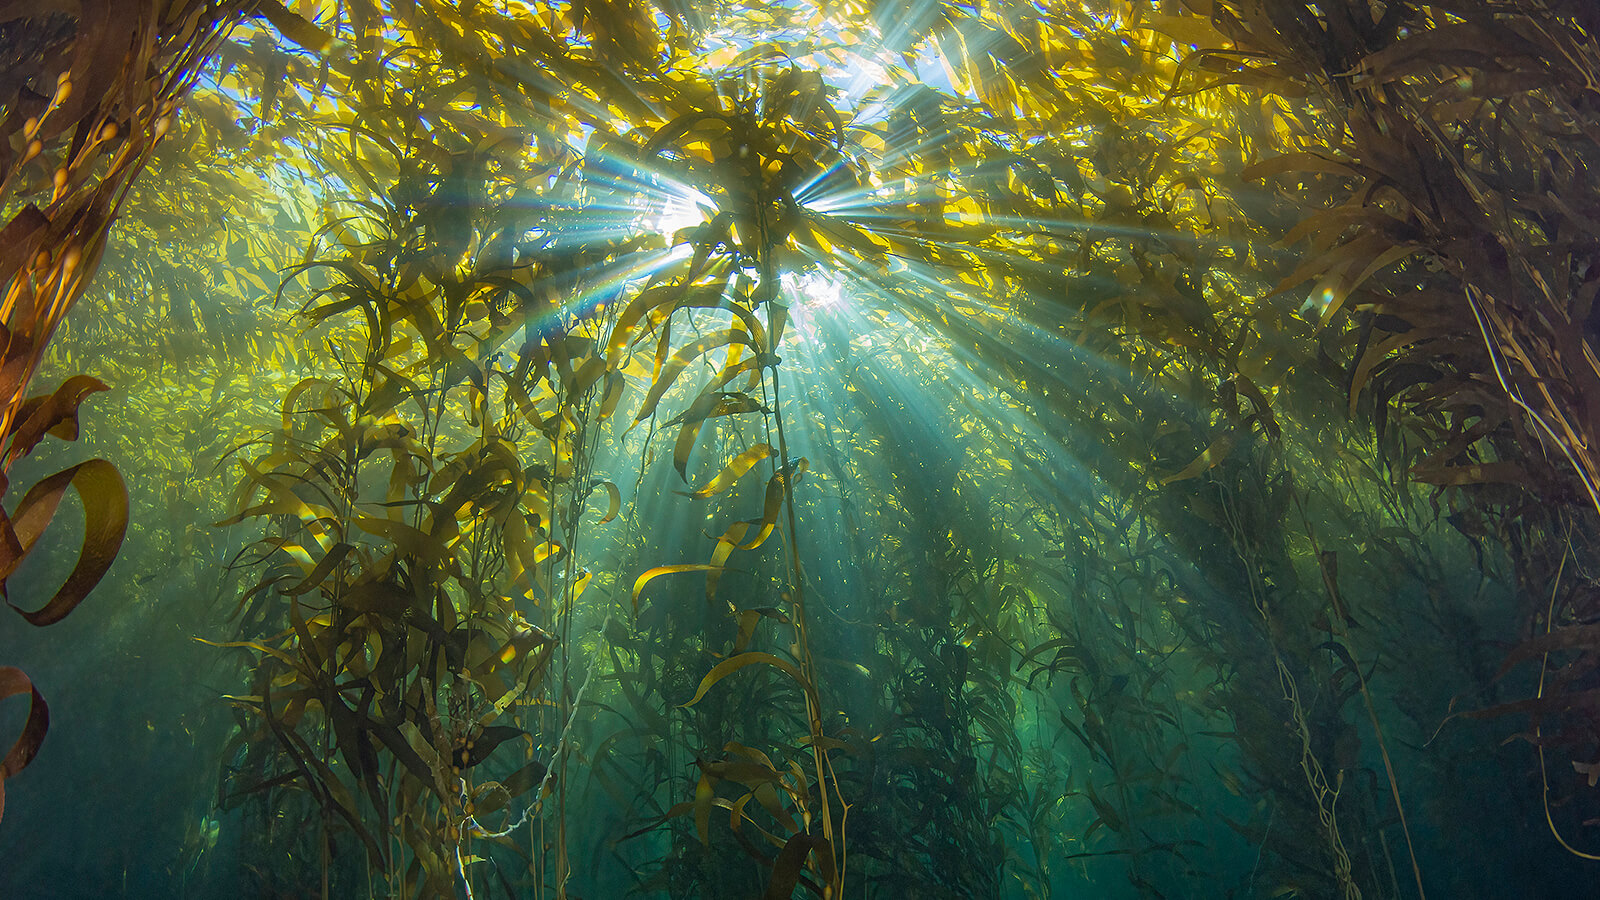 Underwater image of the sun shining through kelp seaweed